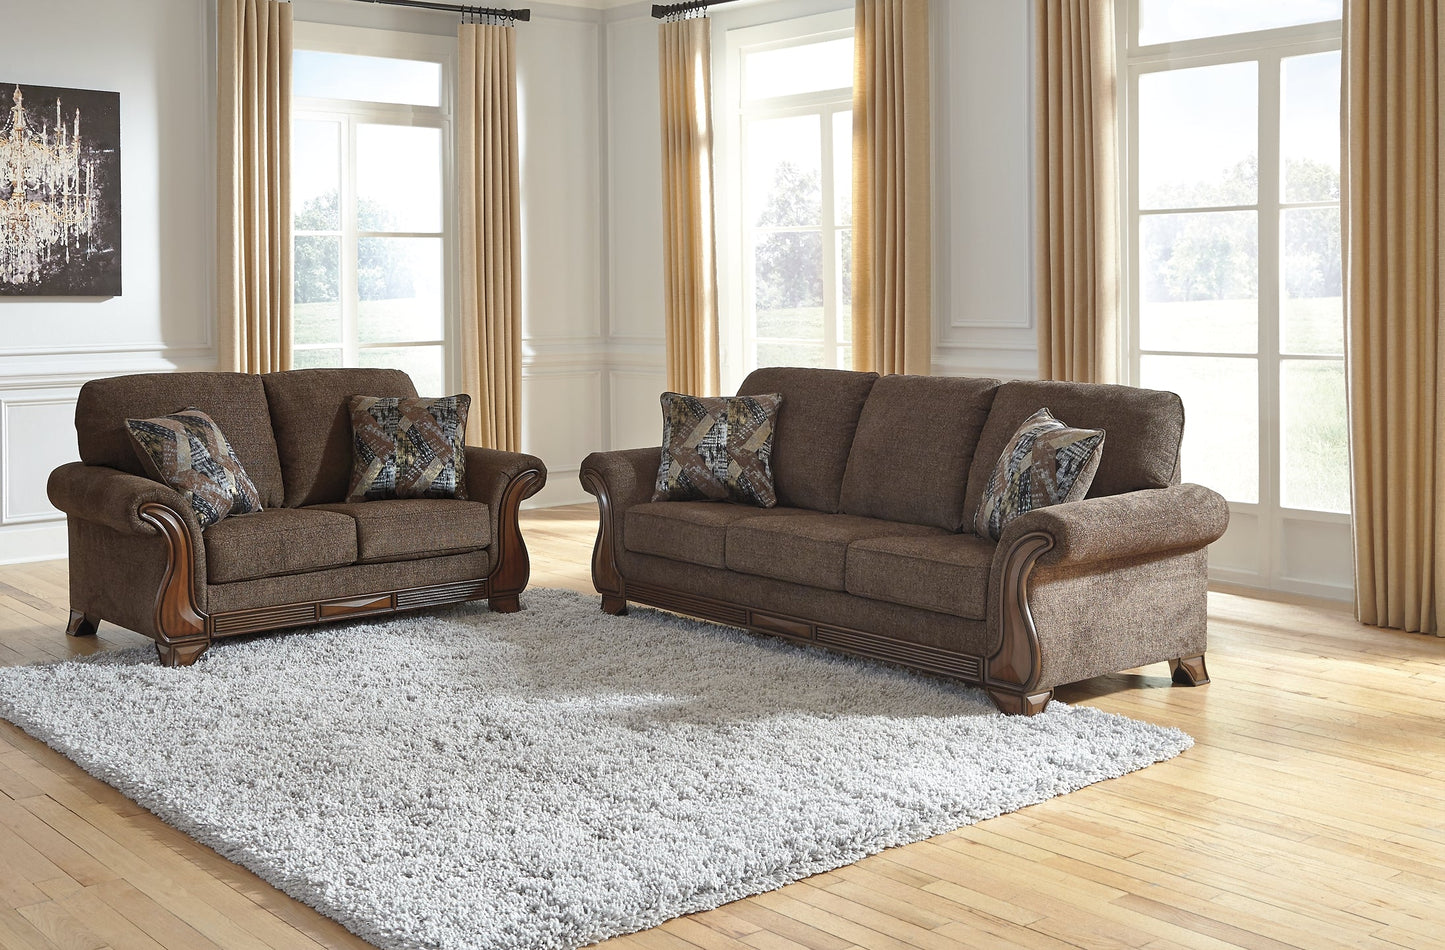 Miltonwood Sofa and Loveseat at Cloud 9 Mattress & Furniture furniture, home furnishing, home decor